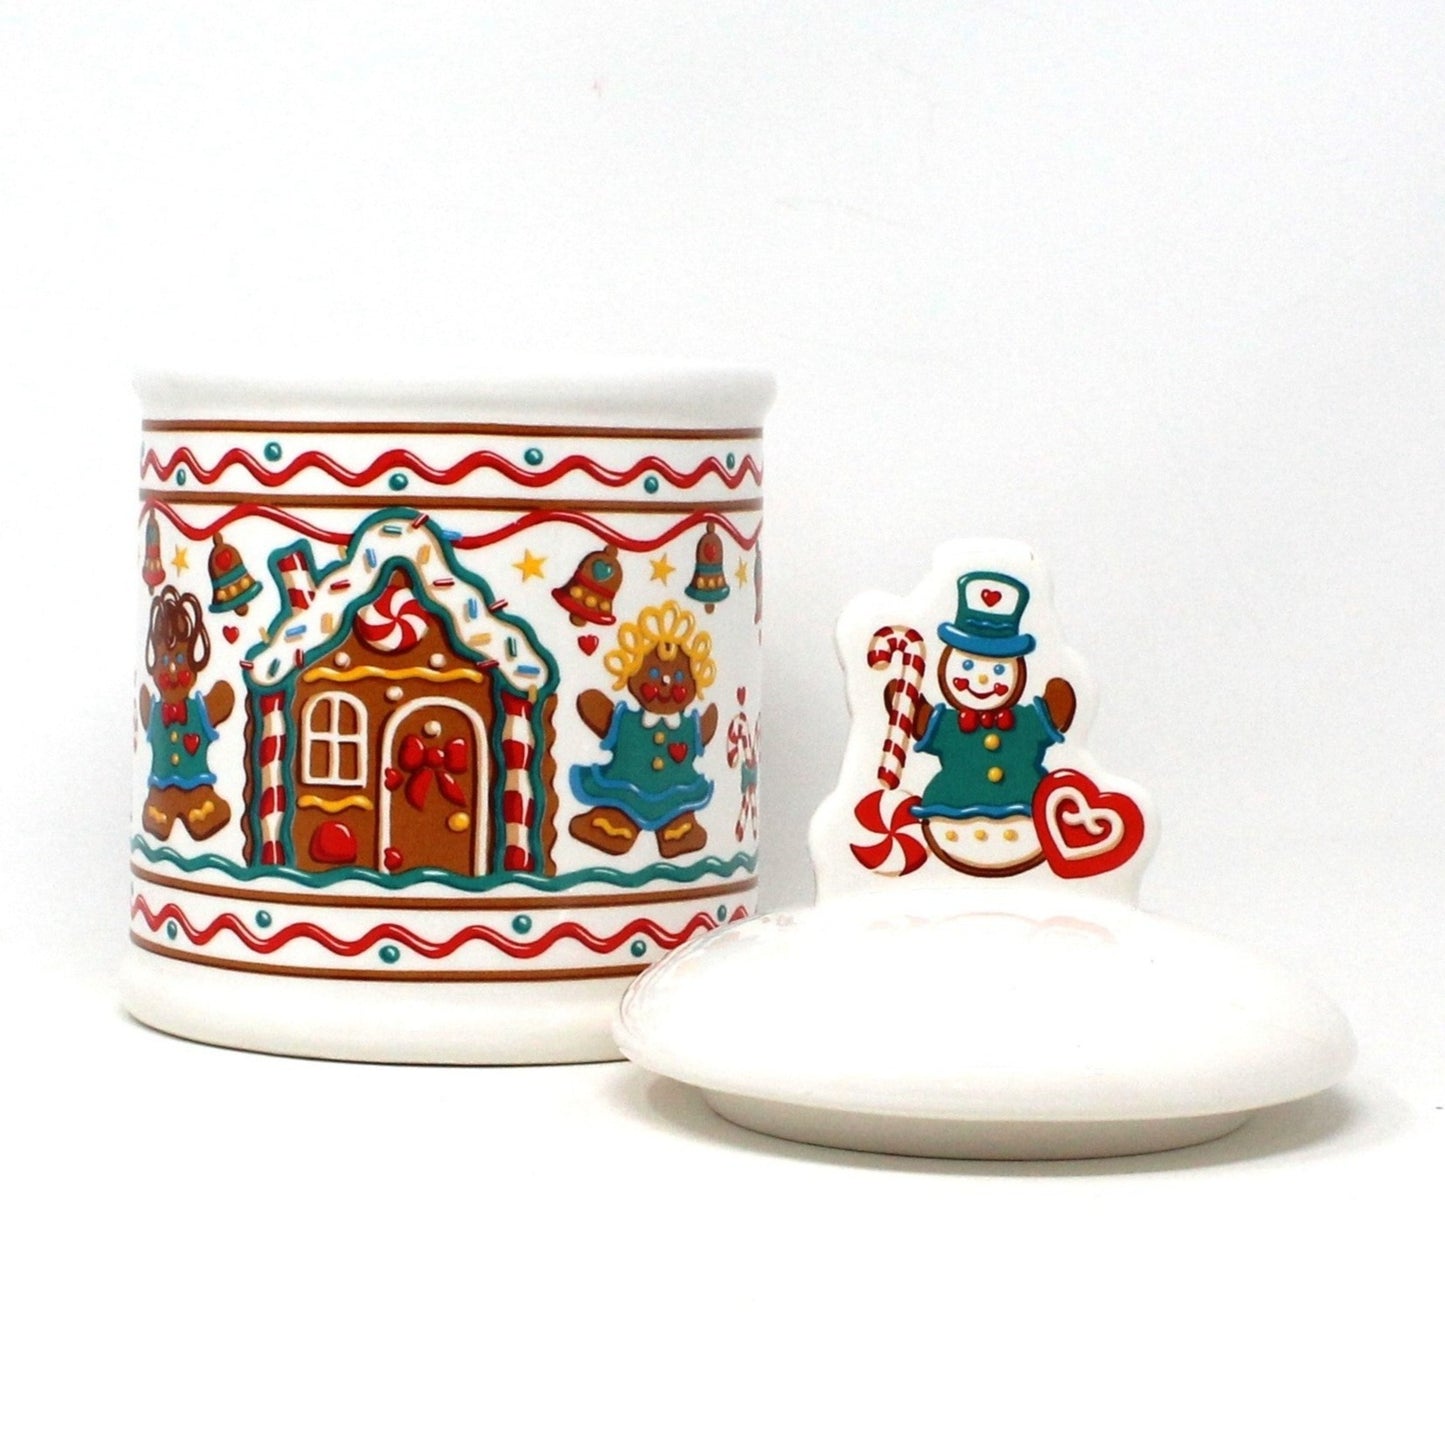 Cookie Jar, Teleflora, Gingerbread House Christmas Jar / Canister, Vintage